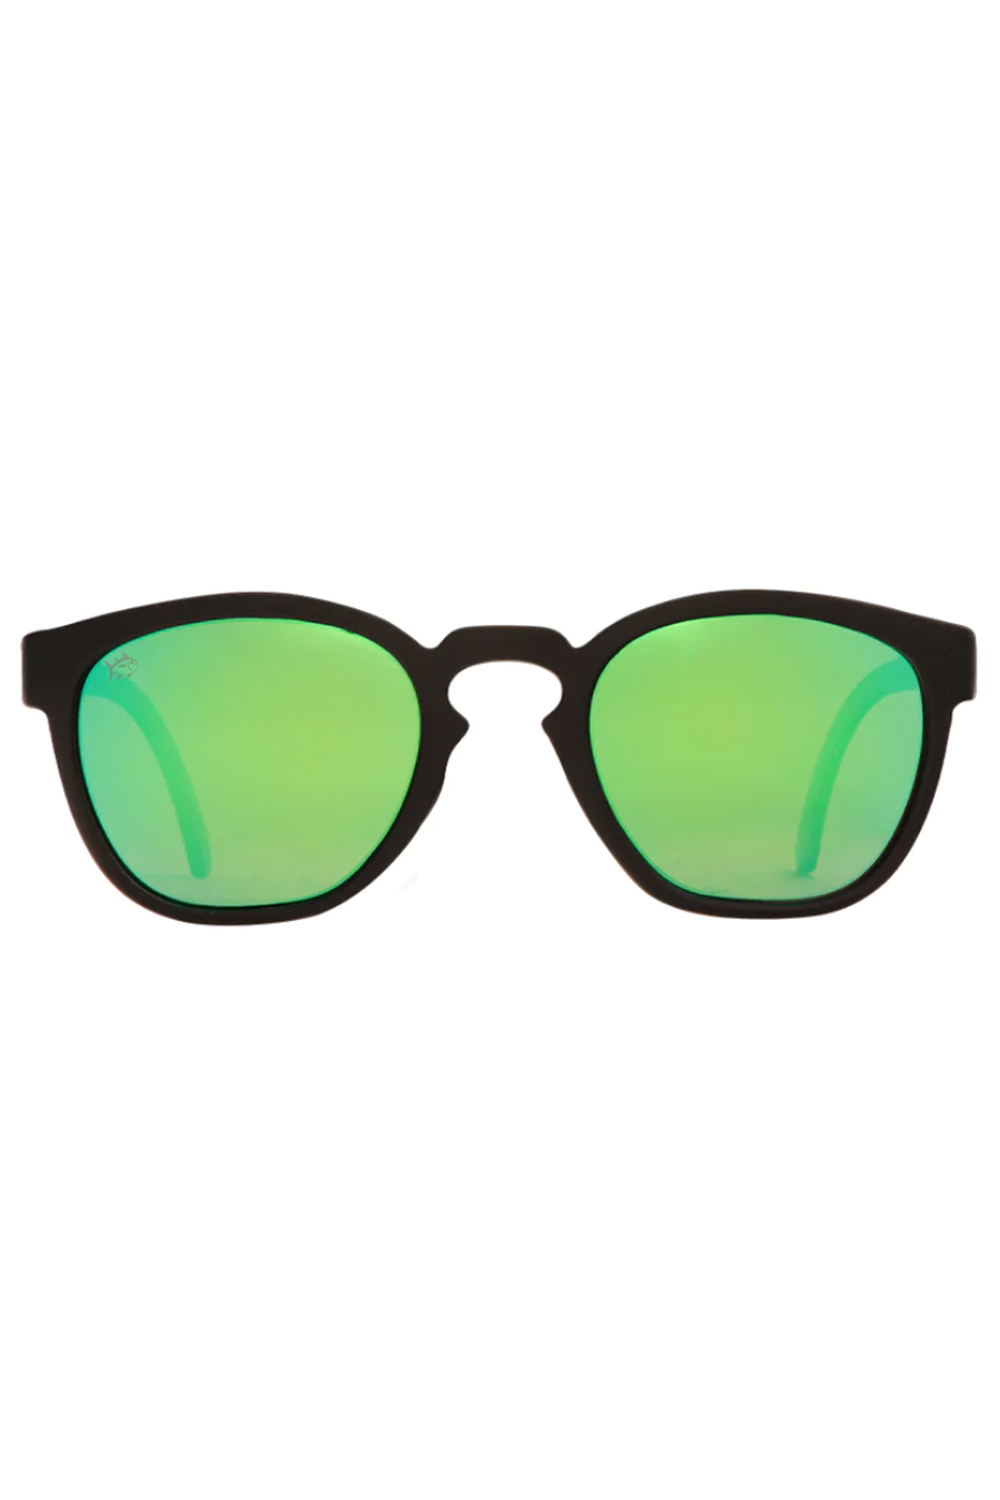 Rheos Sunglasses - Seabrooks Gunmetal Emerald